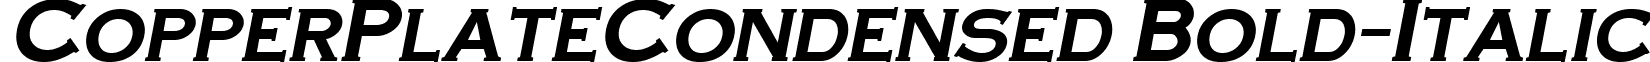 CopperPlateCondensed Bold-Italic font - copperplatecondensedbold-italic.ttf